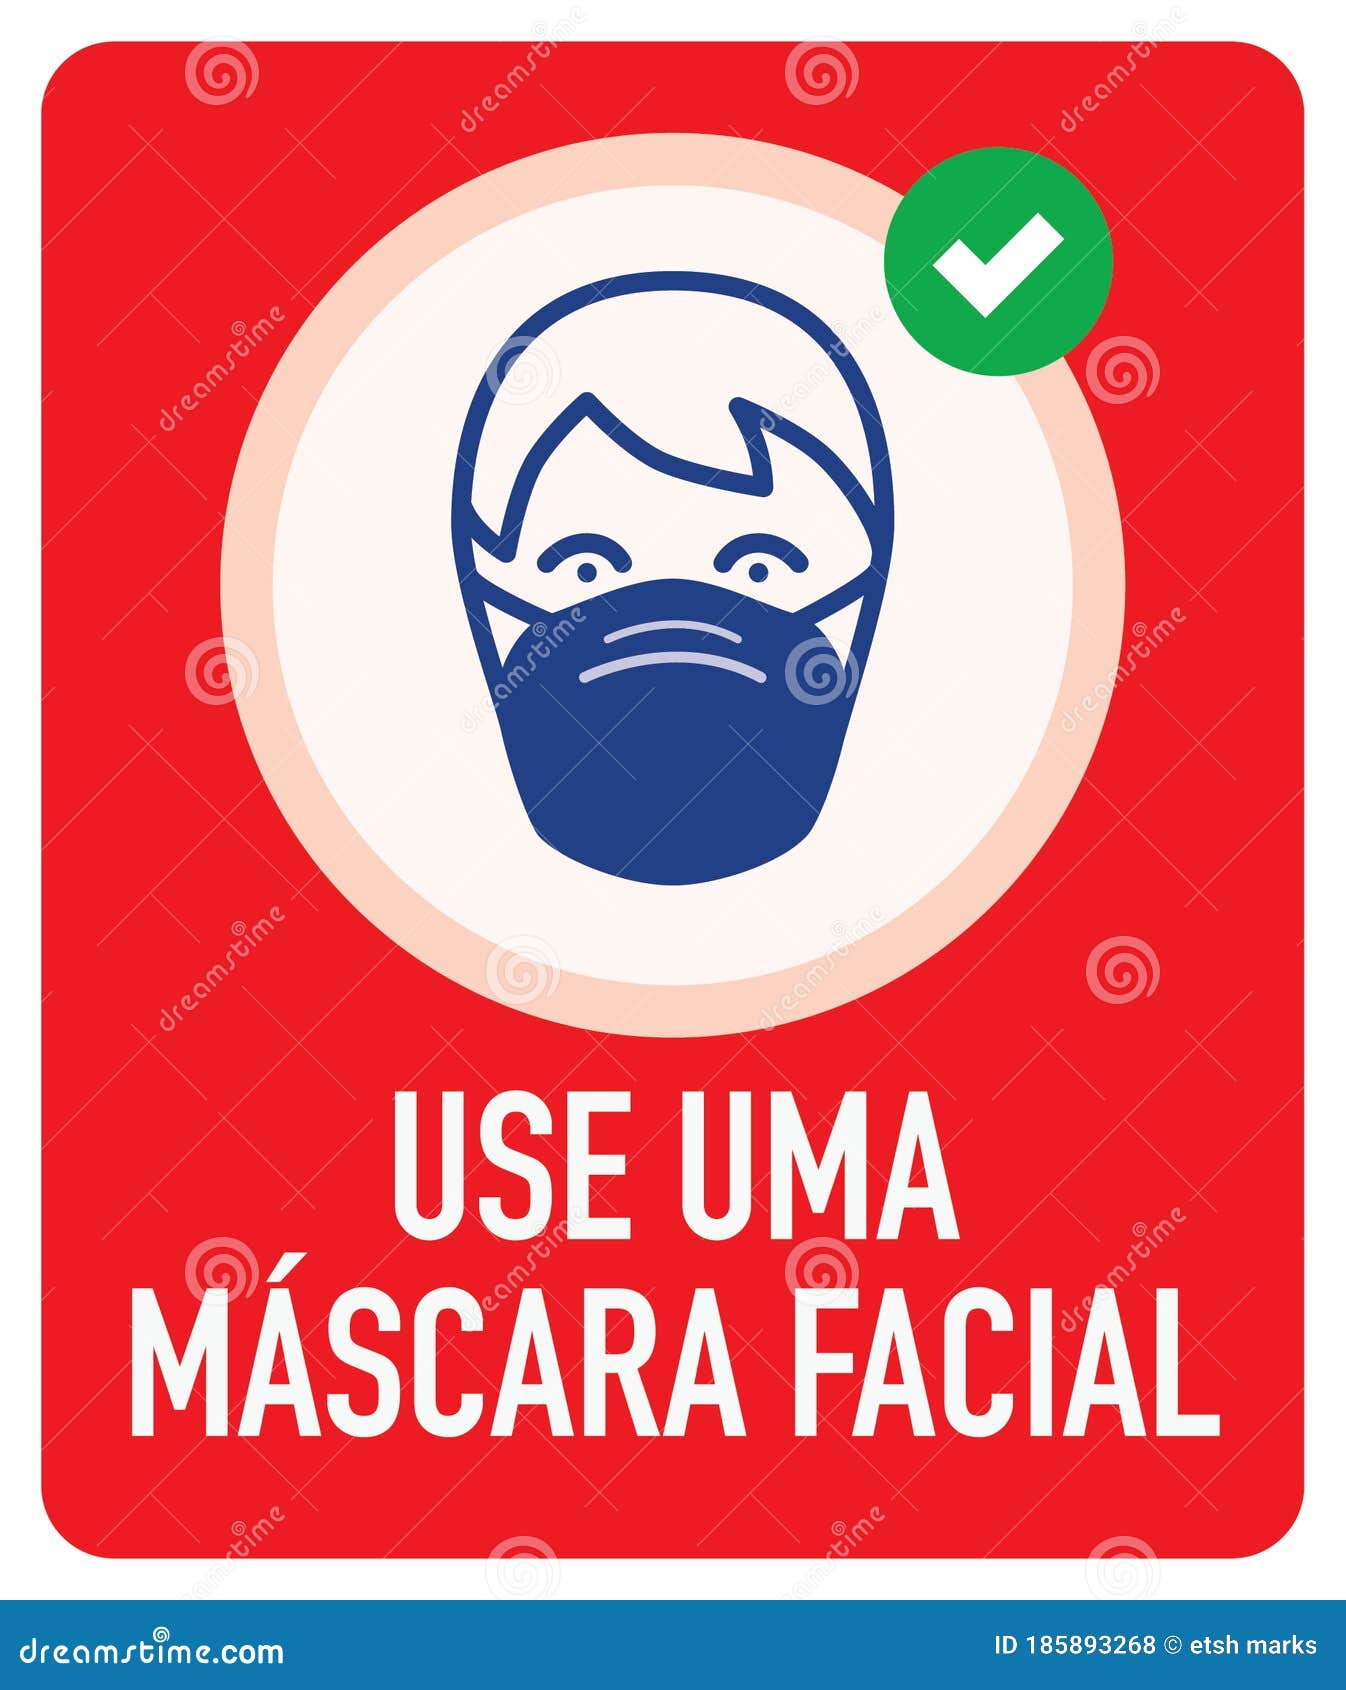 use mÃÂ¡scara facial `use face mask` in portuguese icon.